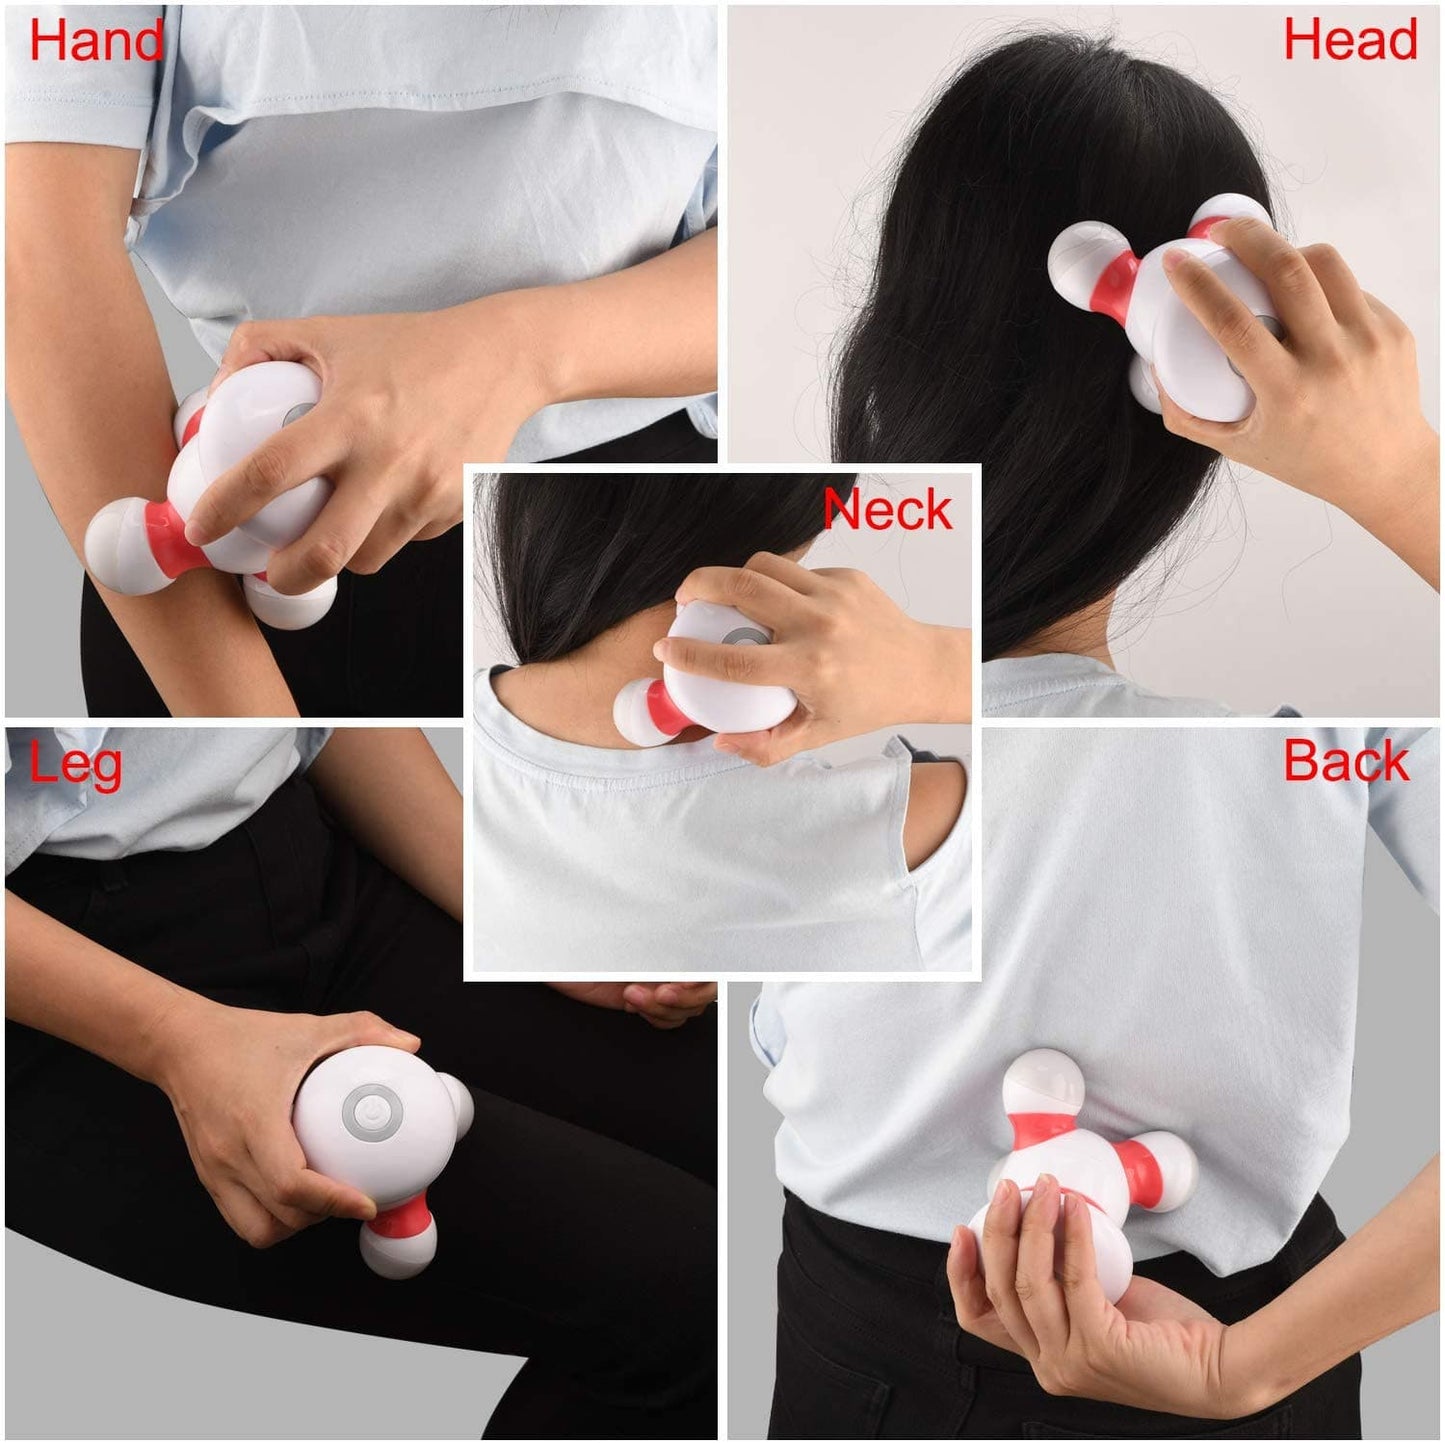 Cotsoco Handheld Massager Mini Portable Vibrating Body Massager with LED Light